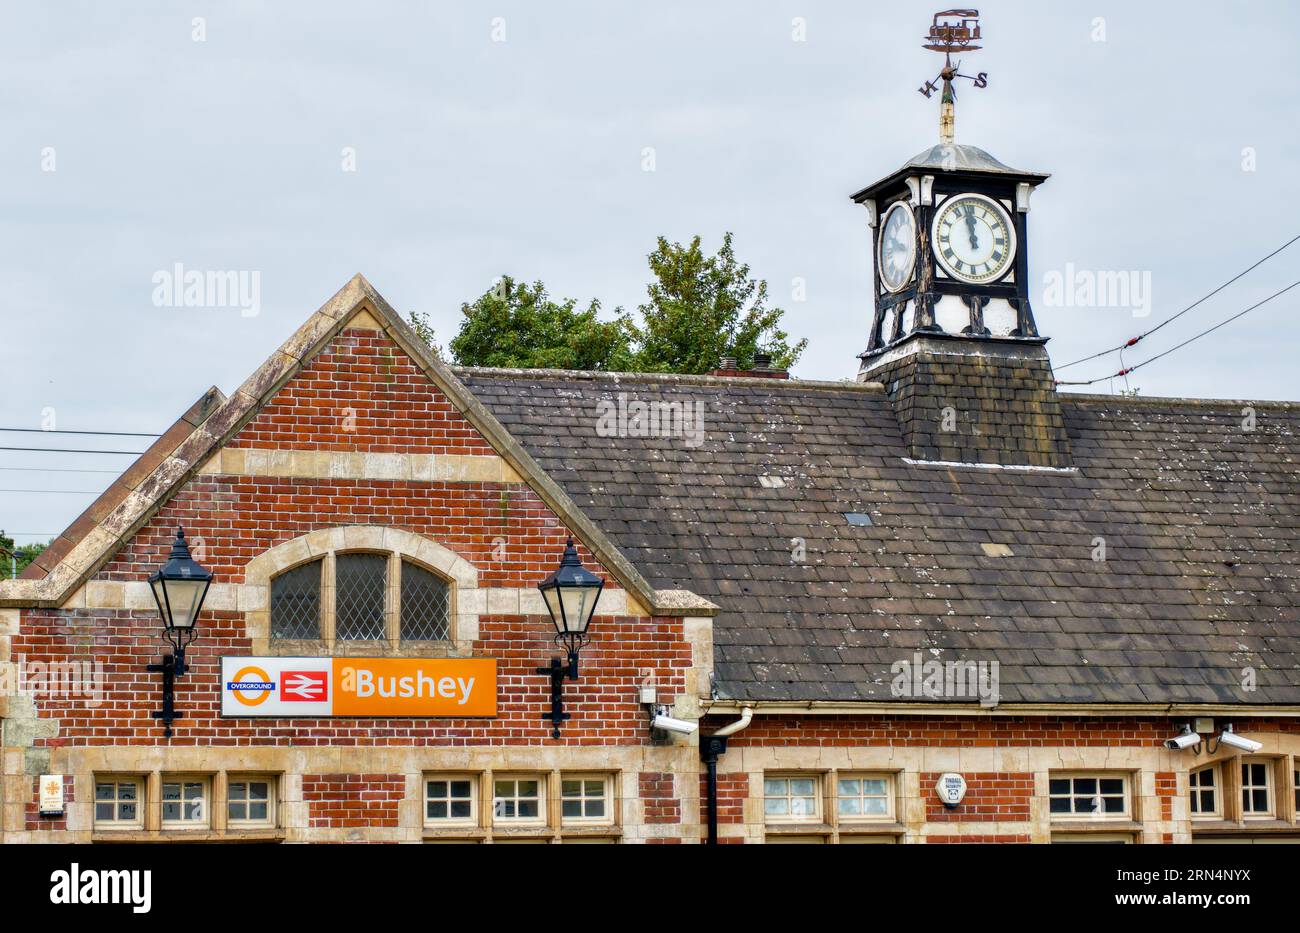 Bushey Railway Station, Hertfordshire, England, UK Stock Photo